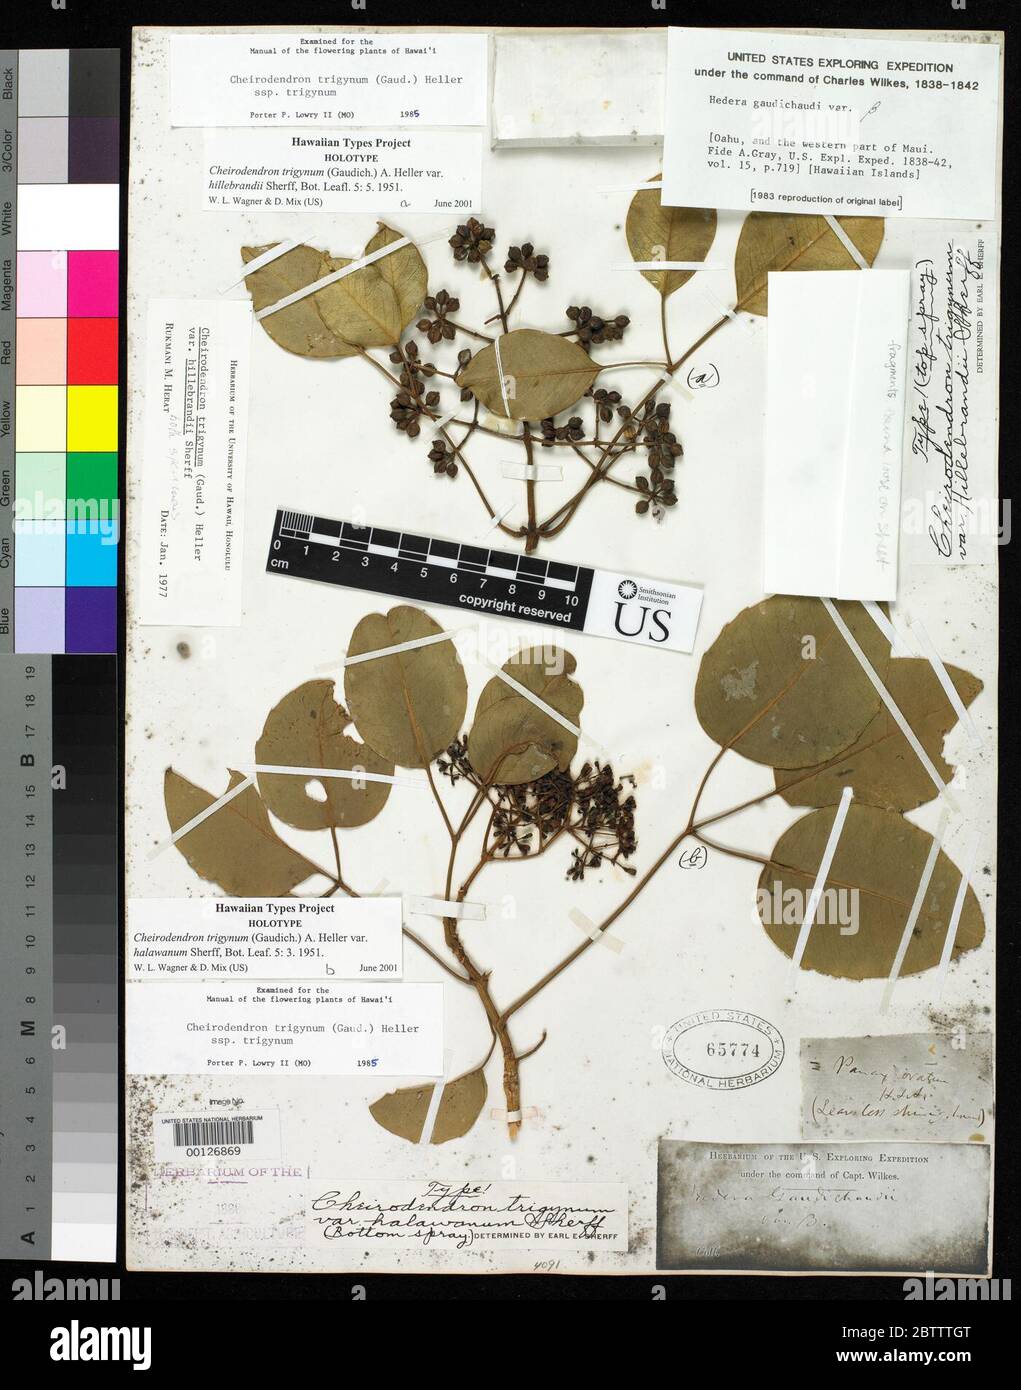 Cheirodendron trigynum var hillebrandii Sherff. Stock Photo